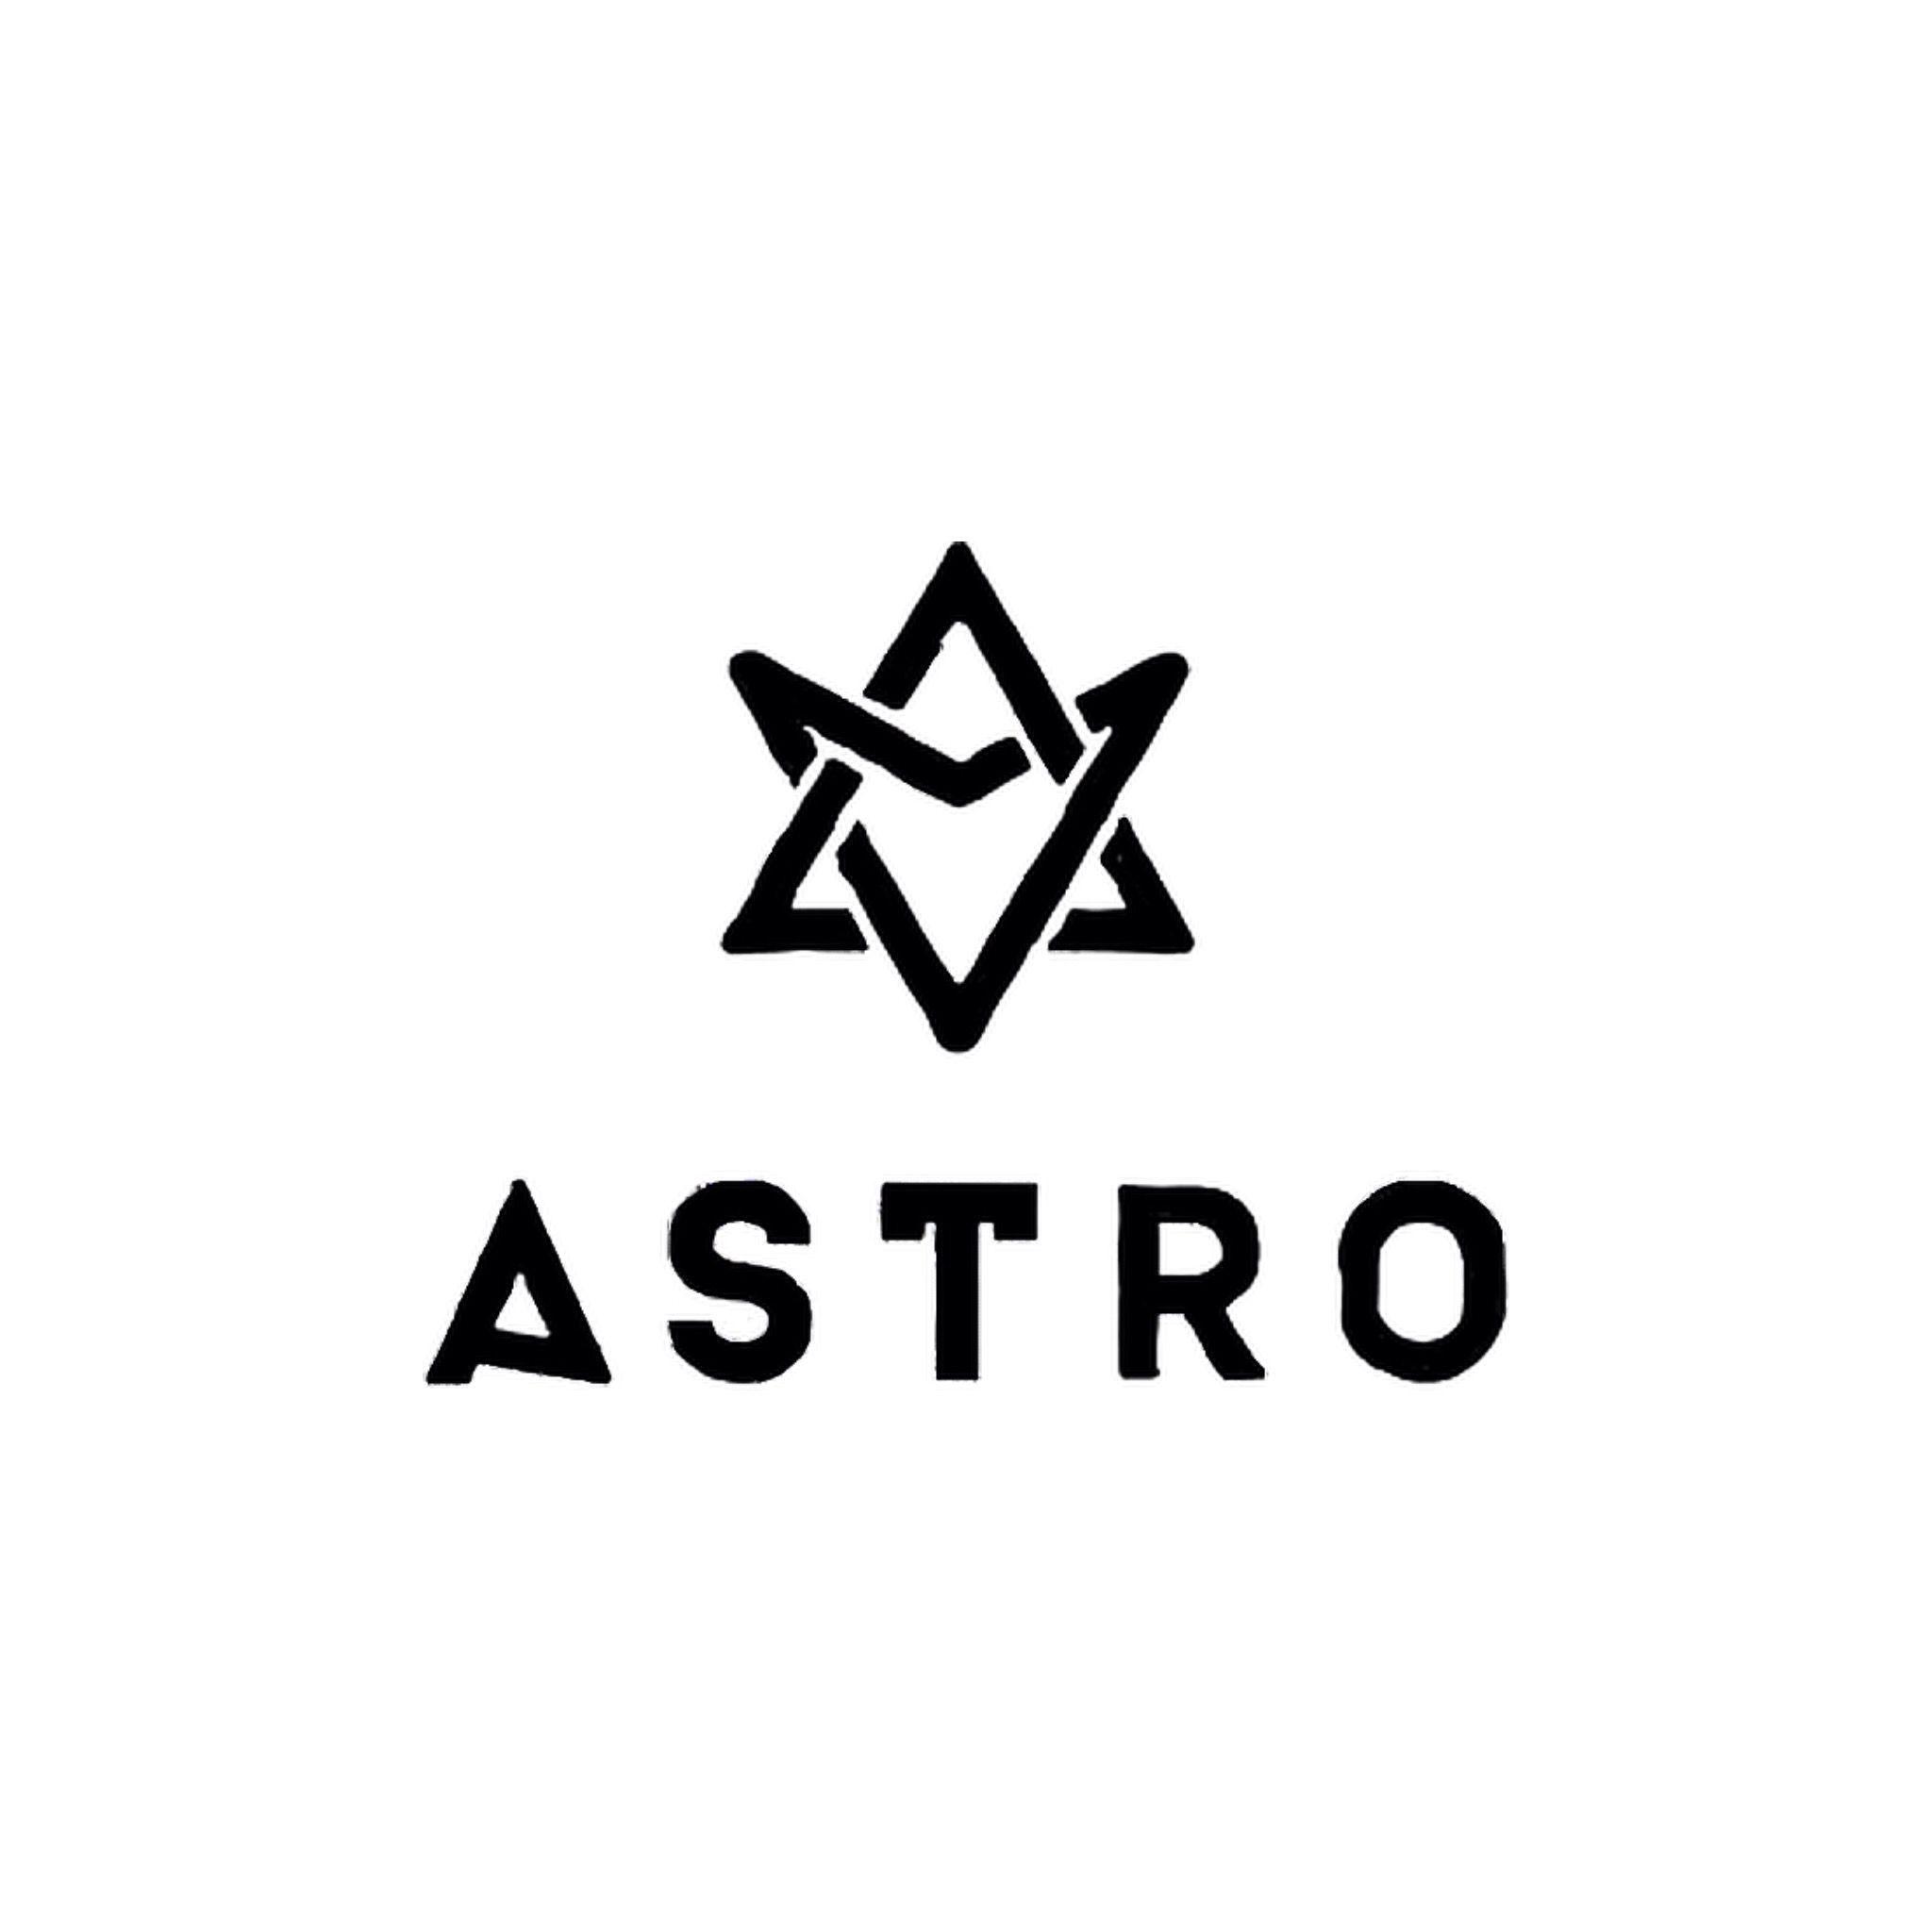 Astro Kpop Logo - Pin by Libro Martinez on ASTRO | 아스트로 | Pinterest | Kpop, Logos ...